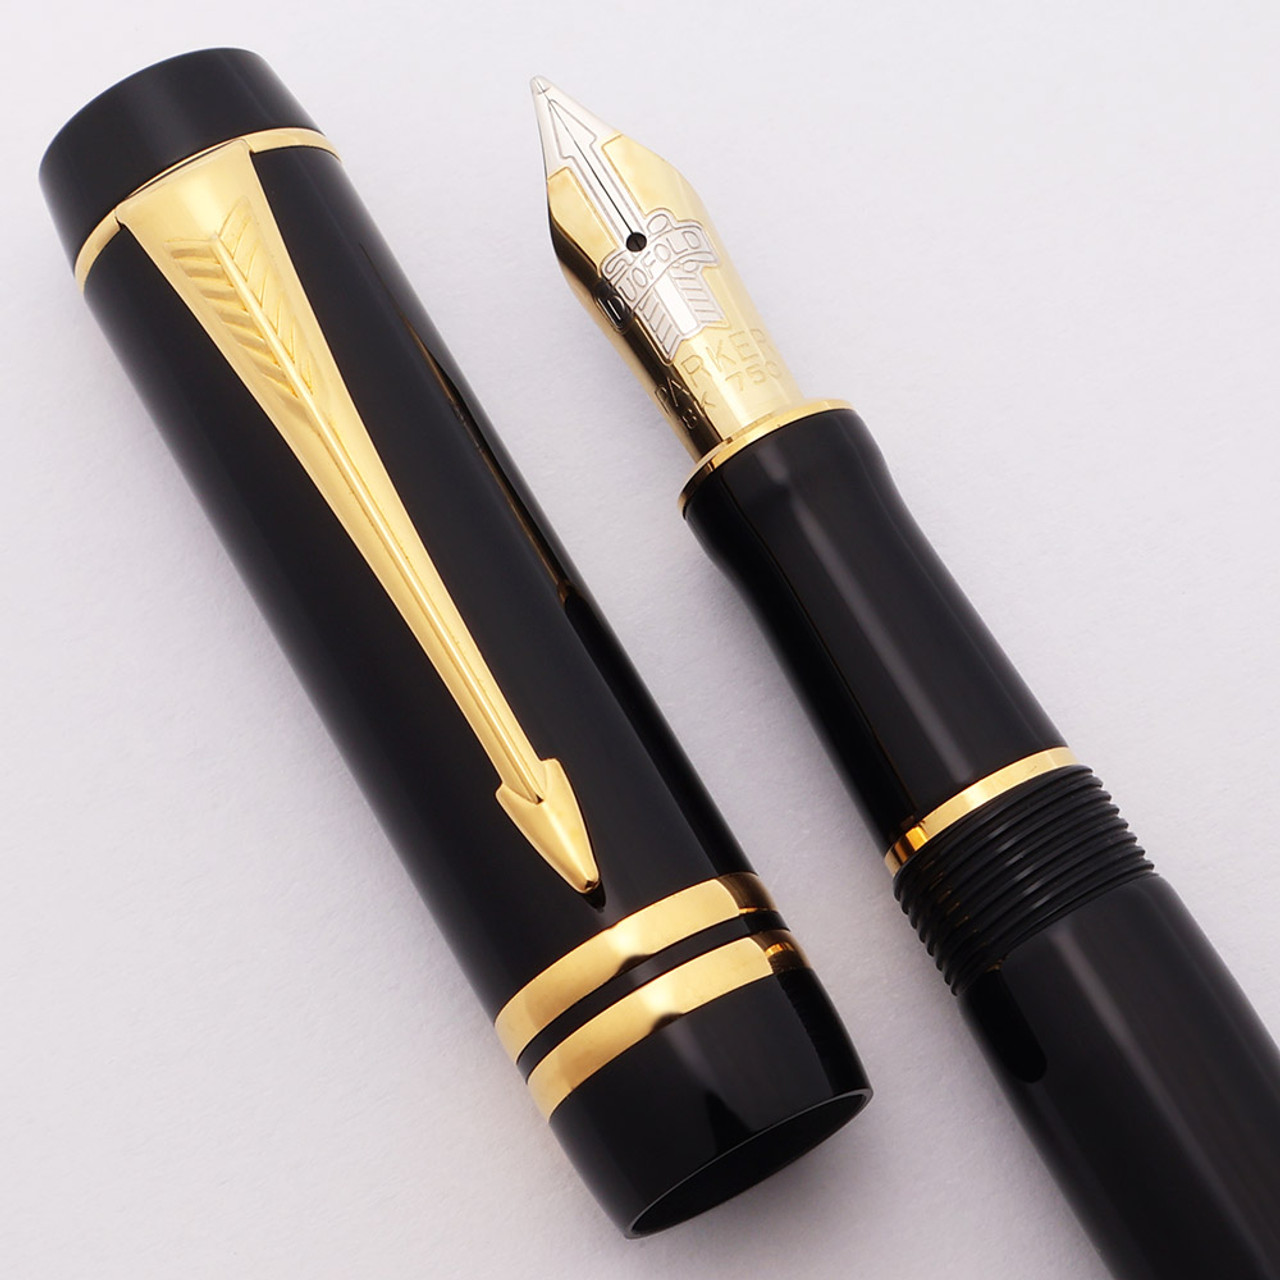 Parker Duofold International Fountain Pen, Mark 2 - Black w Gold Trim, 18k Medium Nib (Near Mint, Works Well)